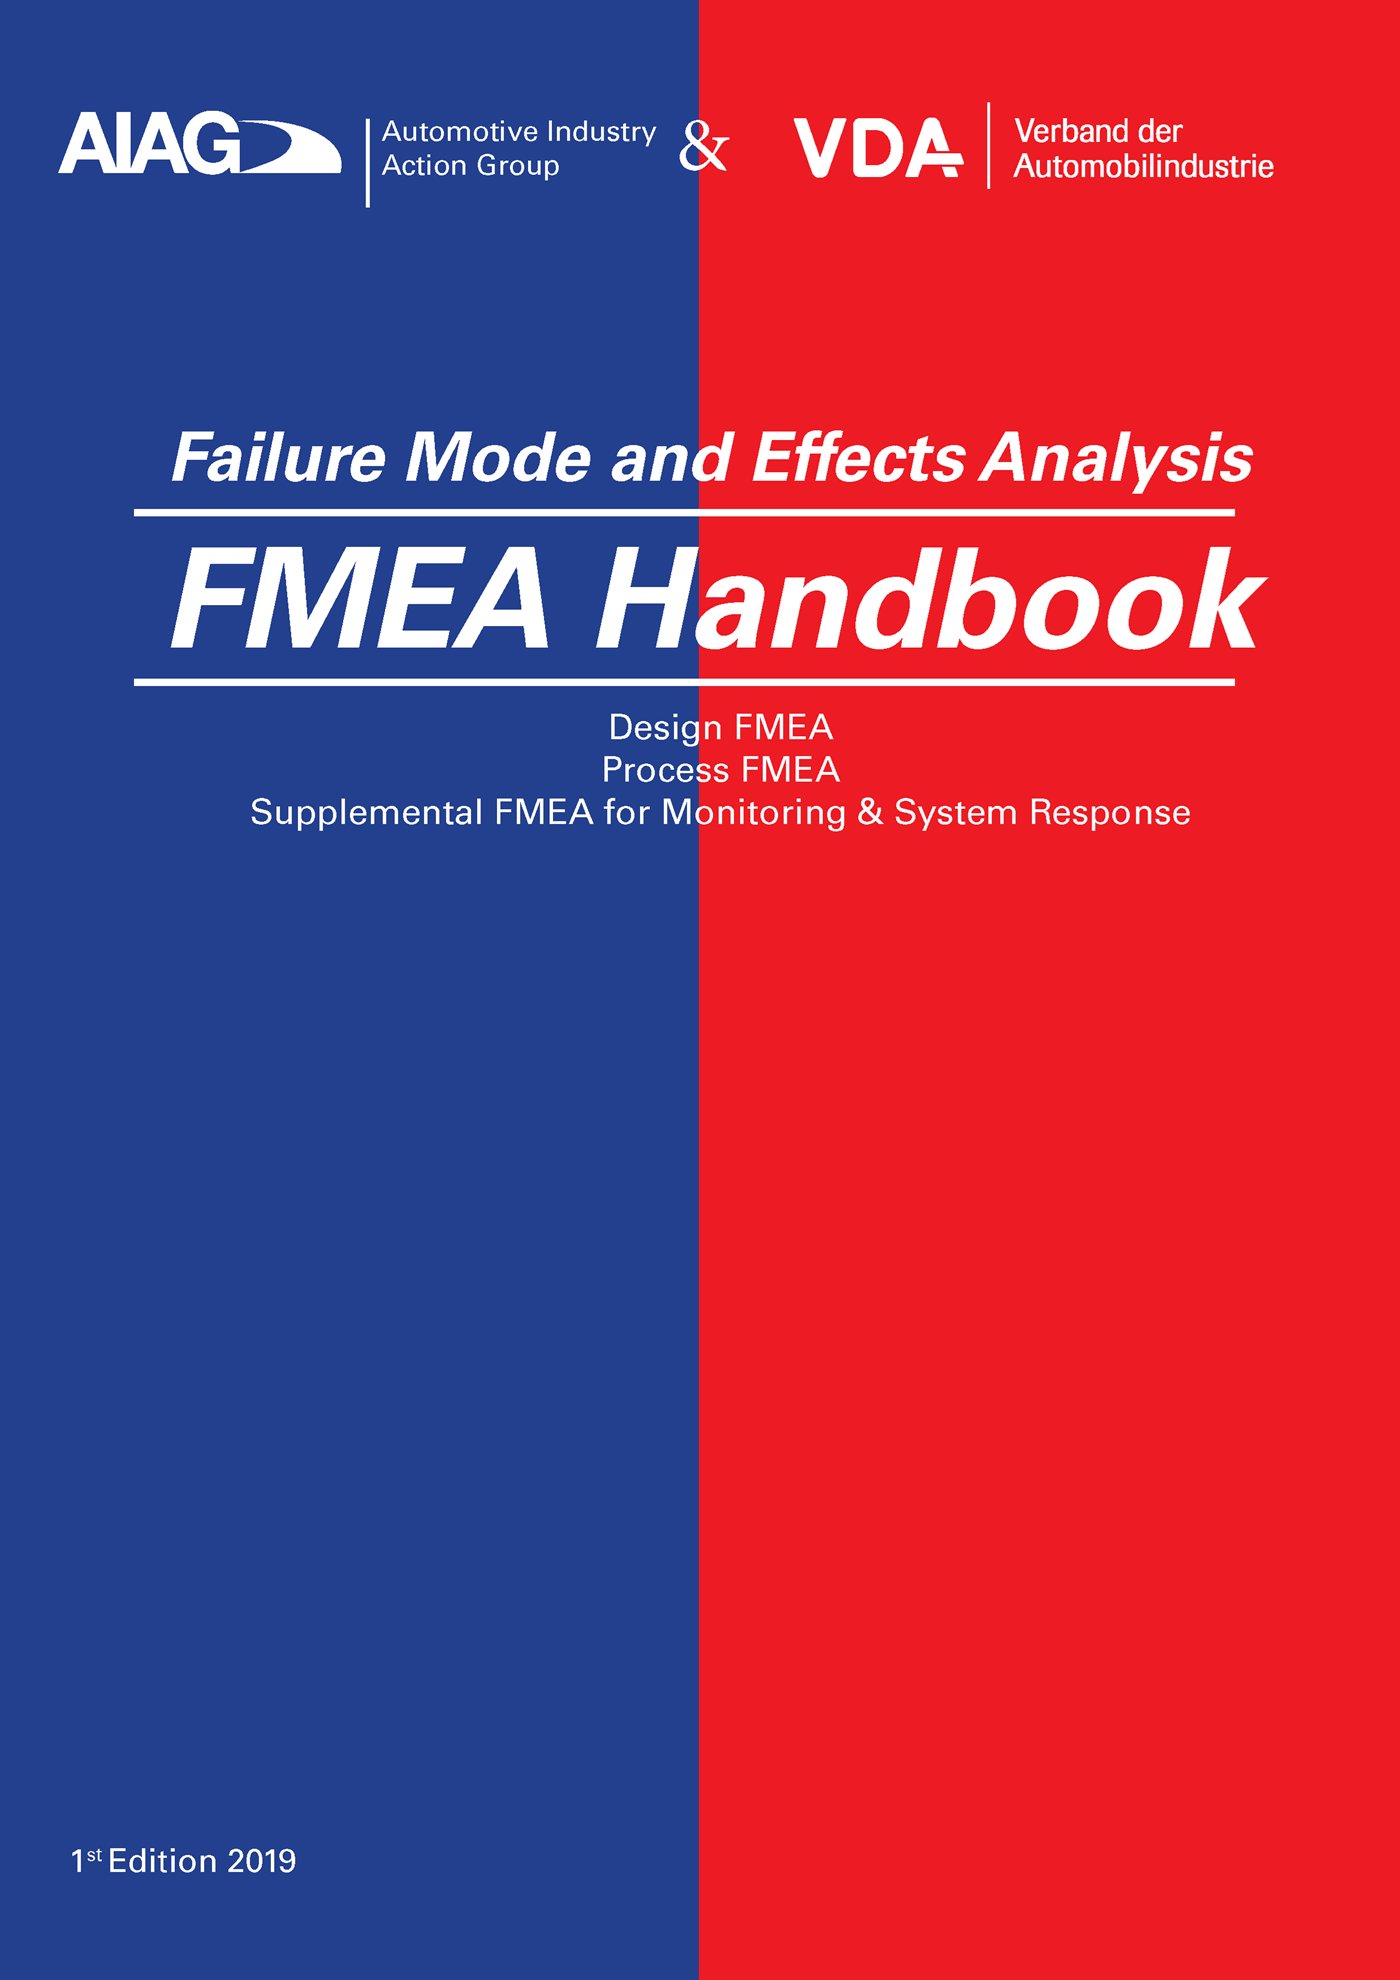 Publikácie  VDA AIAG & VDA FMEA-Handbook
 Design FMEA, Process FMEA, 
 Supplemental FMEA for Monitoring & System Response
 First Edition Issued June 2019 1.1.2019 náhľad